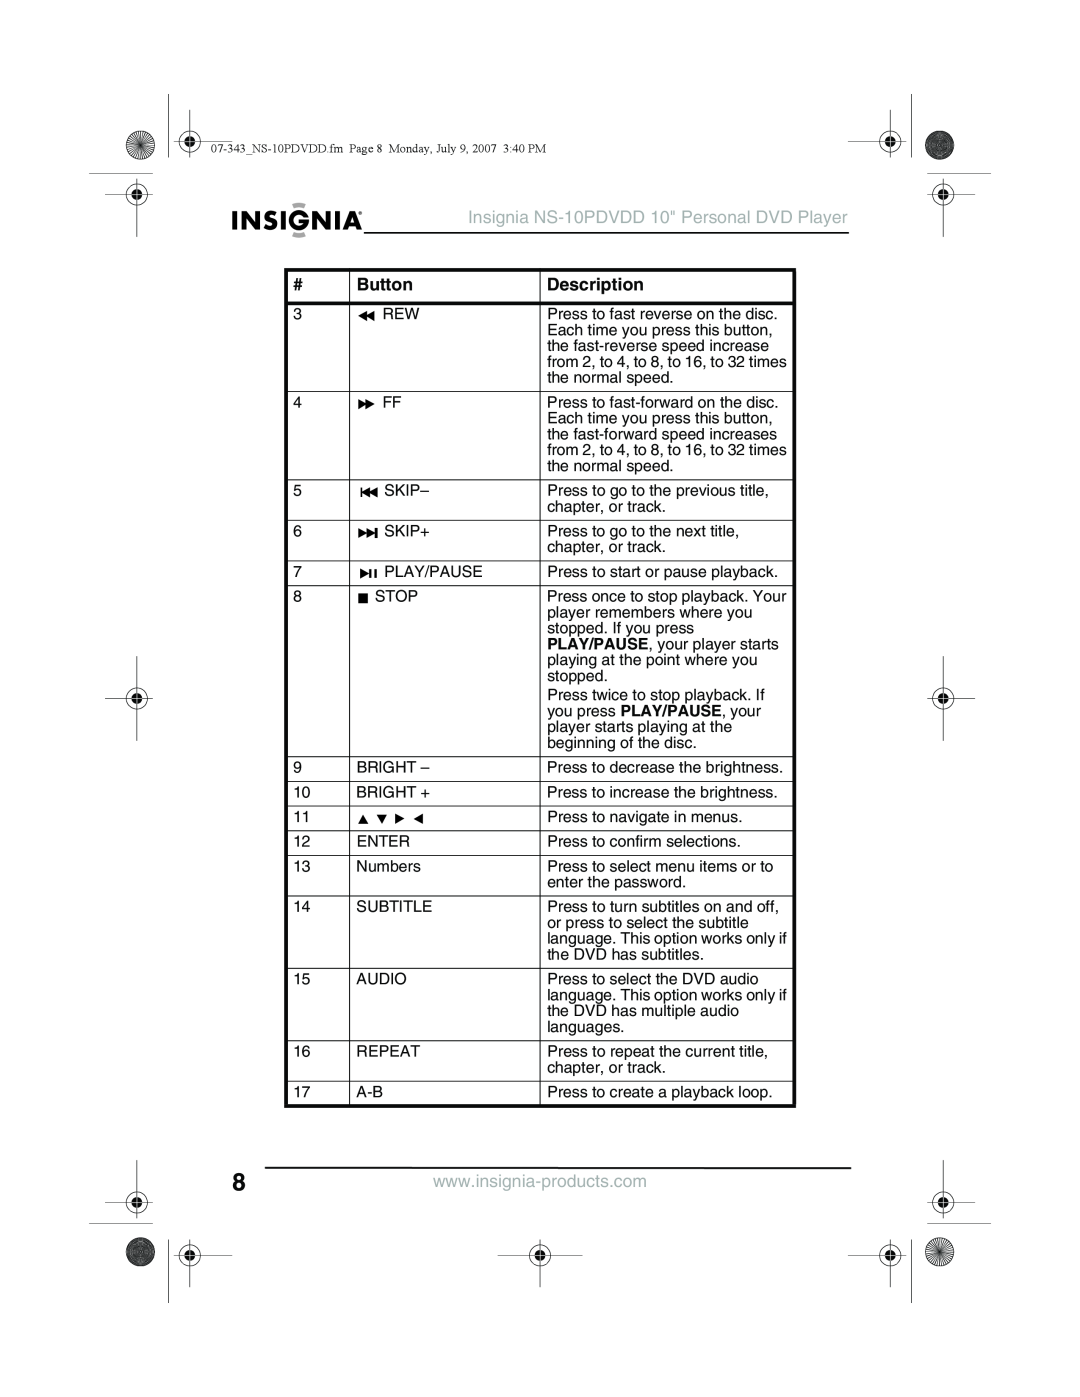 Insignia manual Insignia NS-10PDVDD 10 Personal DVD Player, Button, Description 